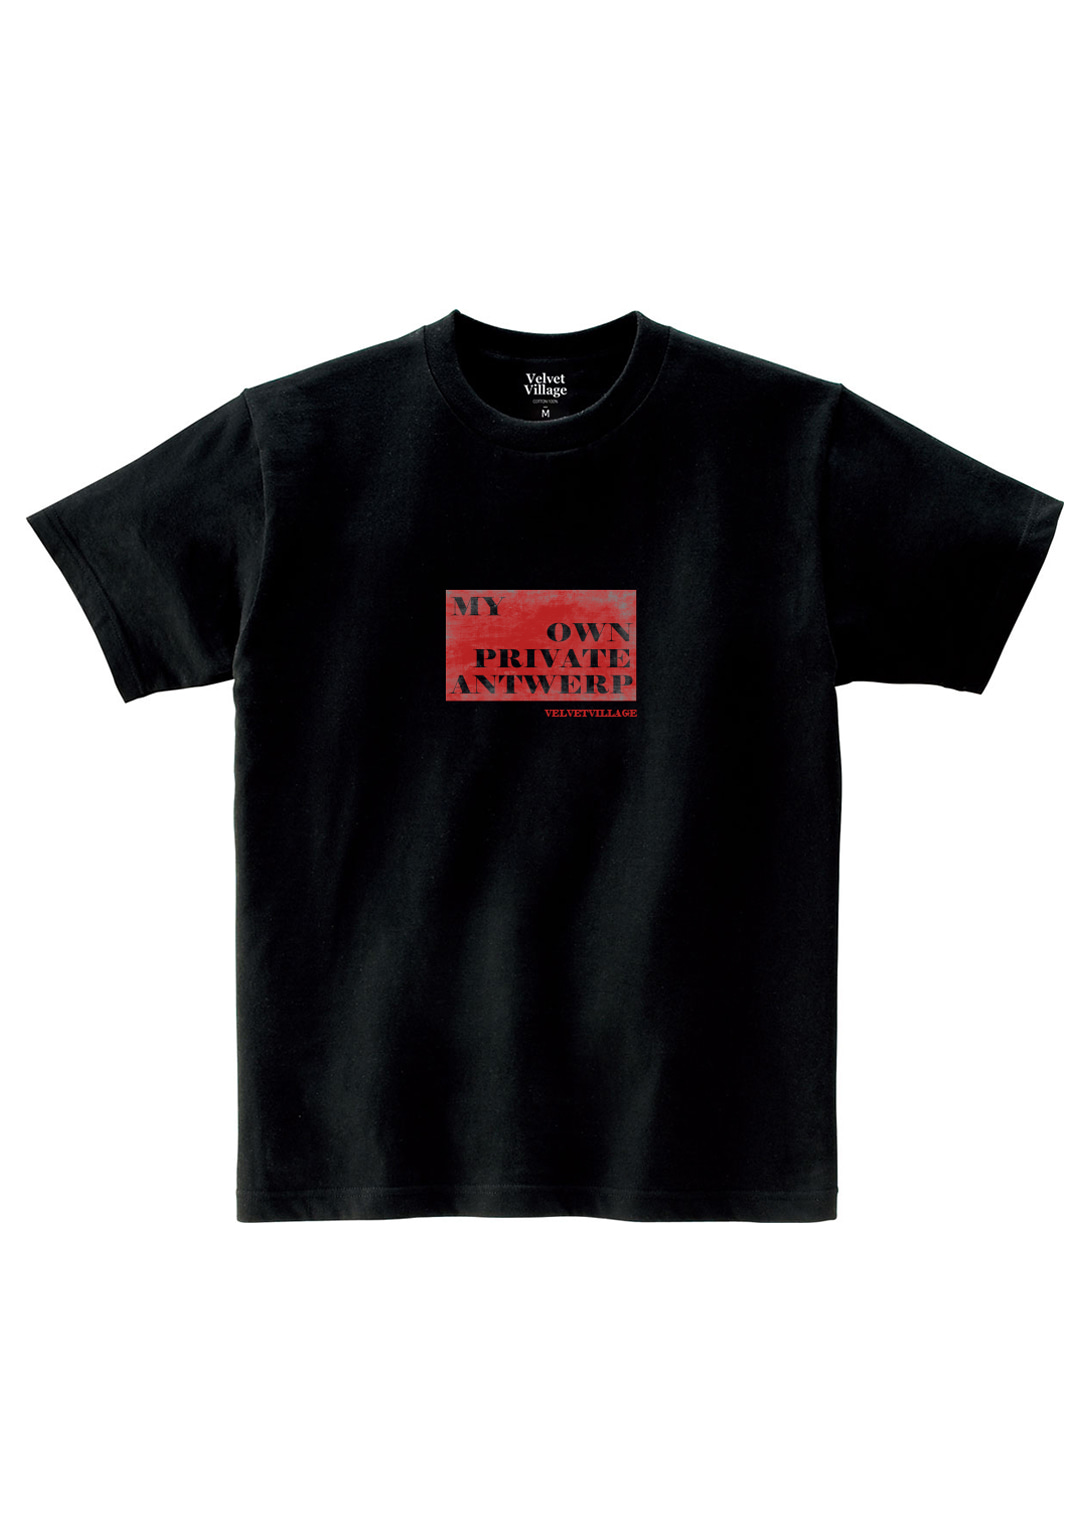 Private Antwerp T-shirt (Black)